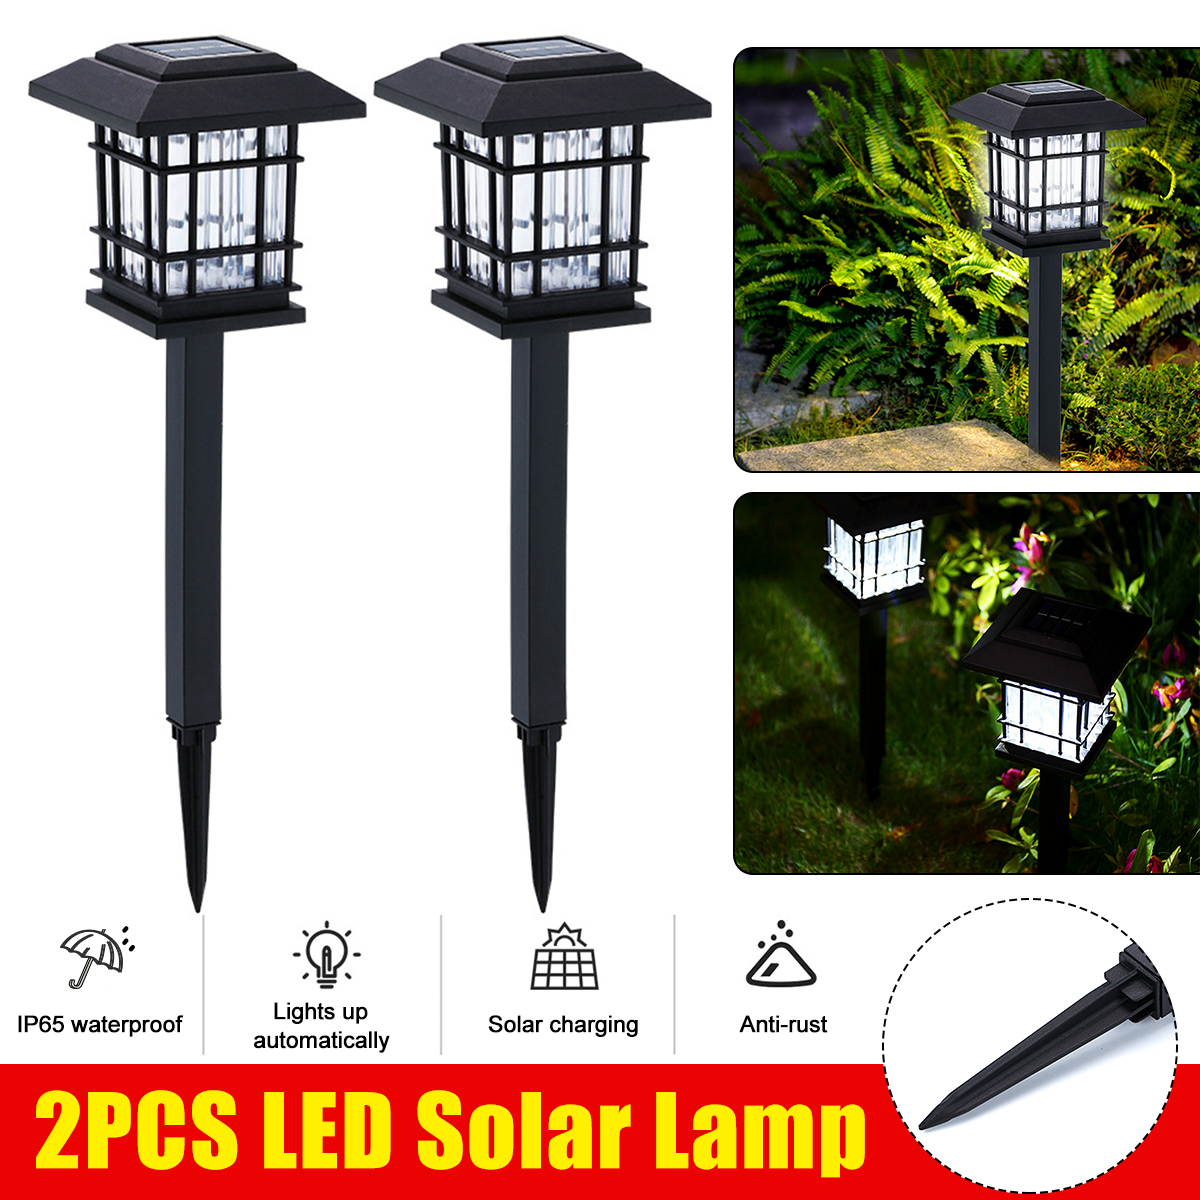 2PCS-Auto-Sensing-LED-Solar-Lamp-Garden-Lamps-For-Outdoor-Patio-Lawn-1755204-2